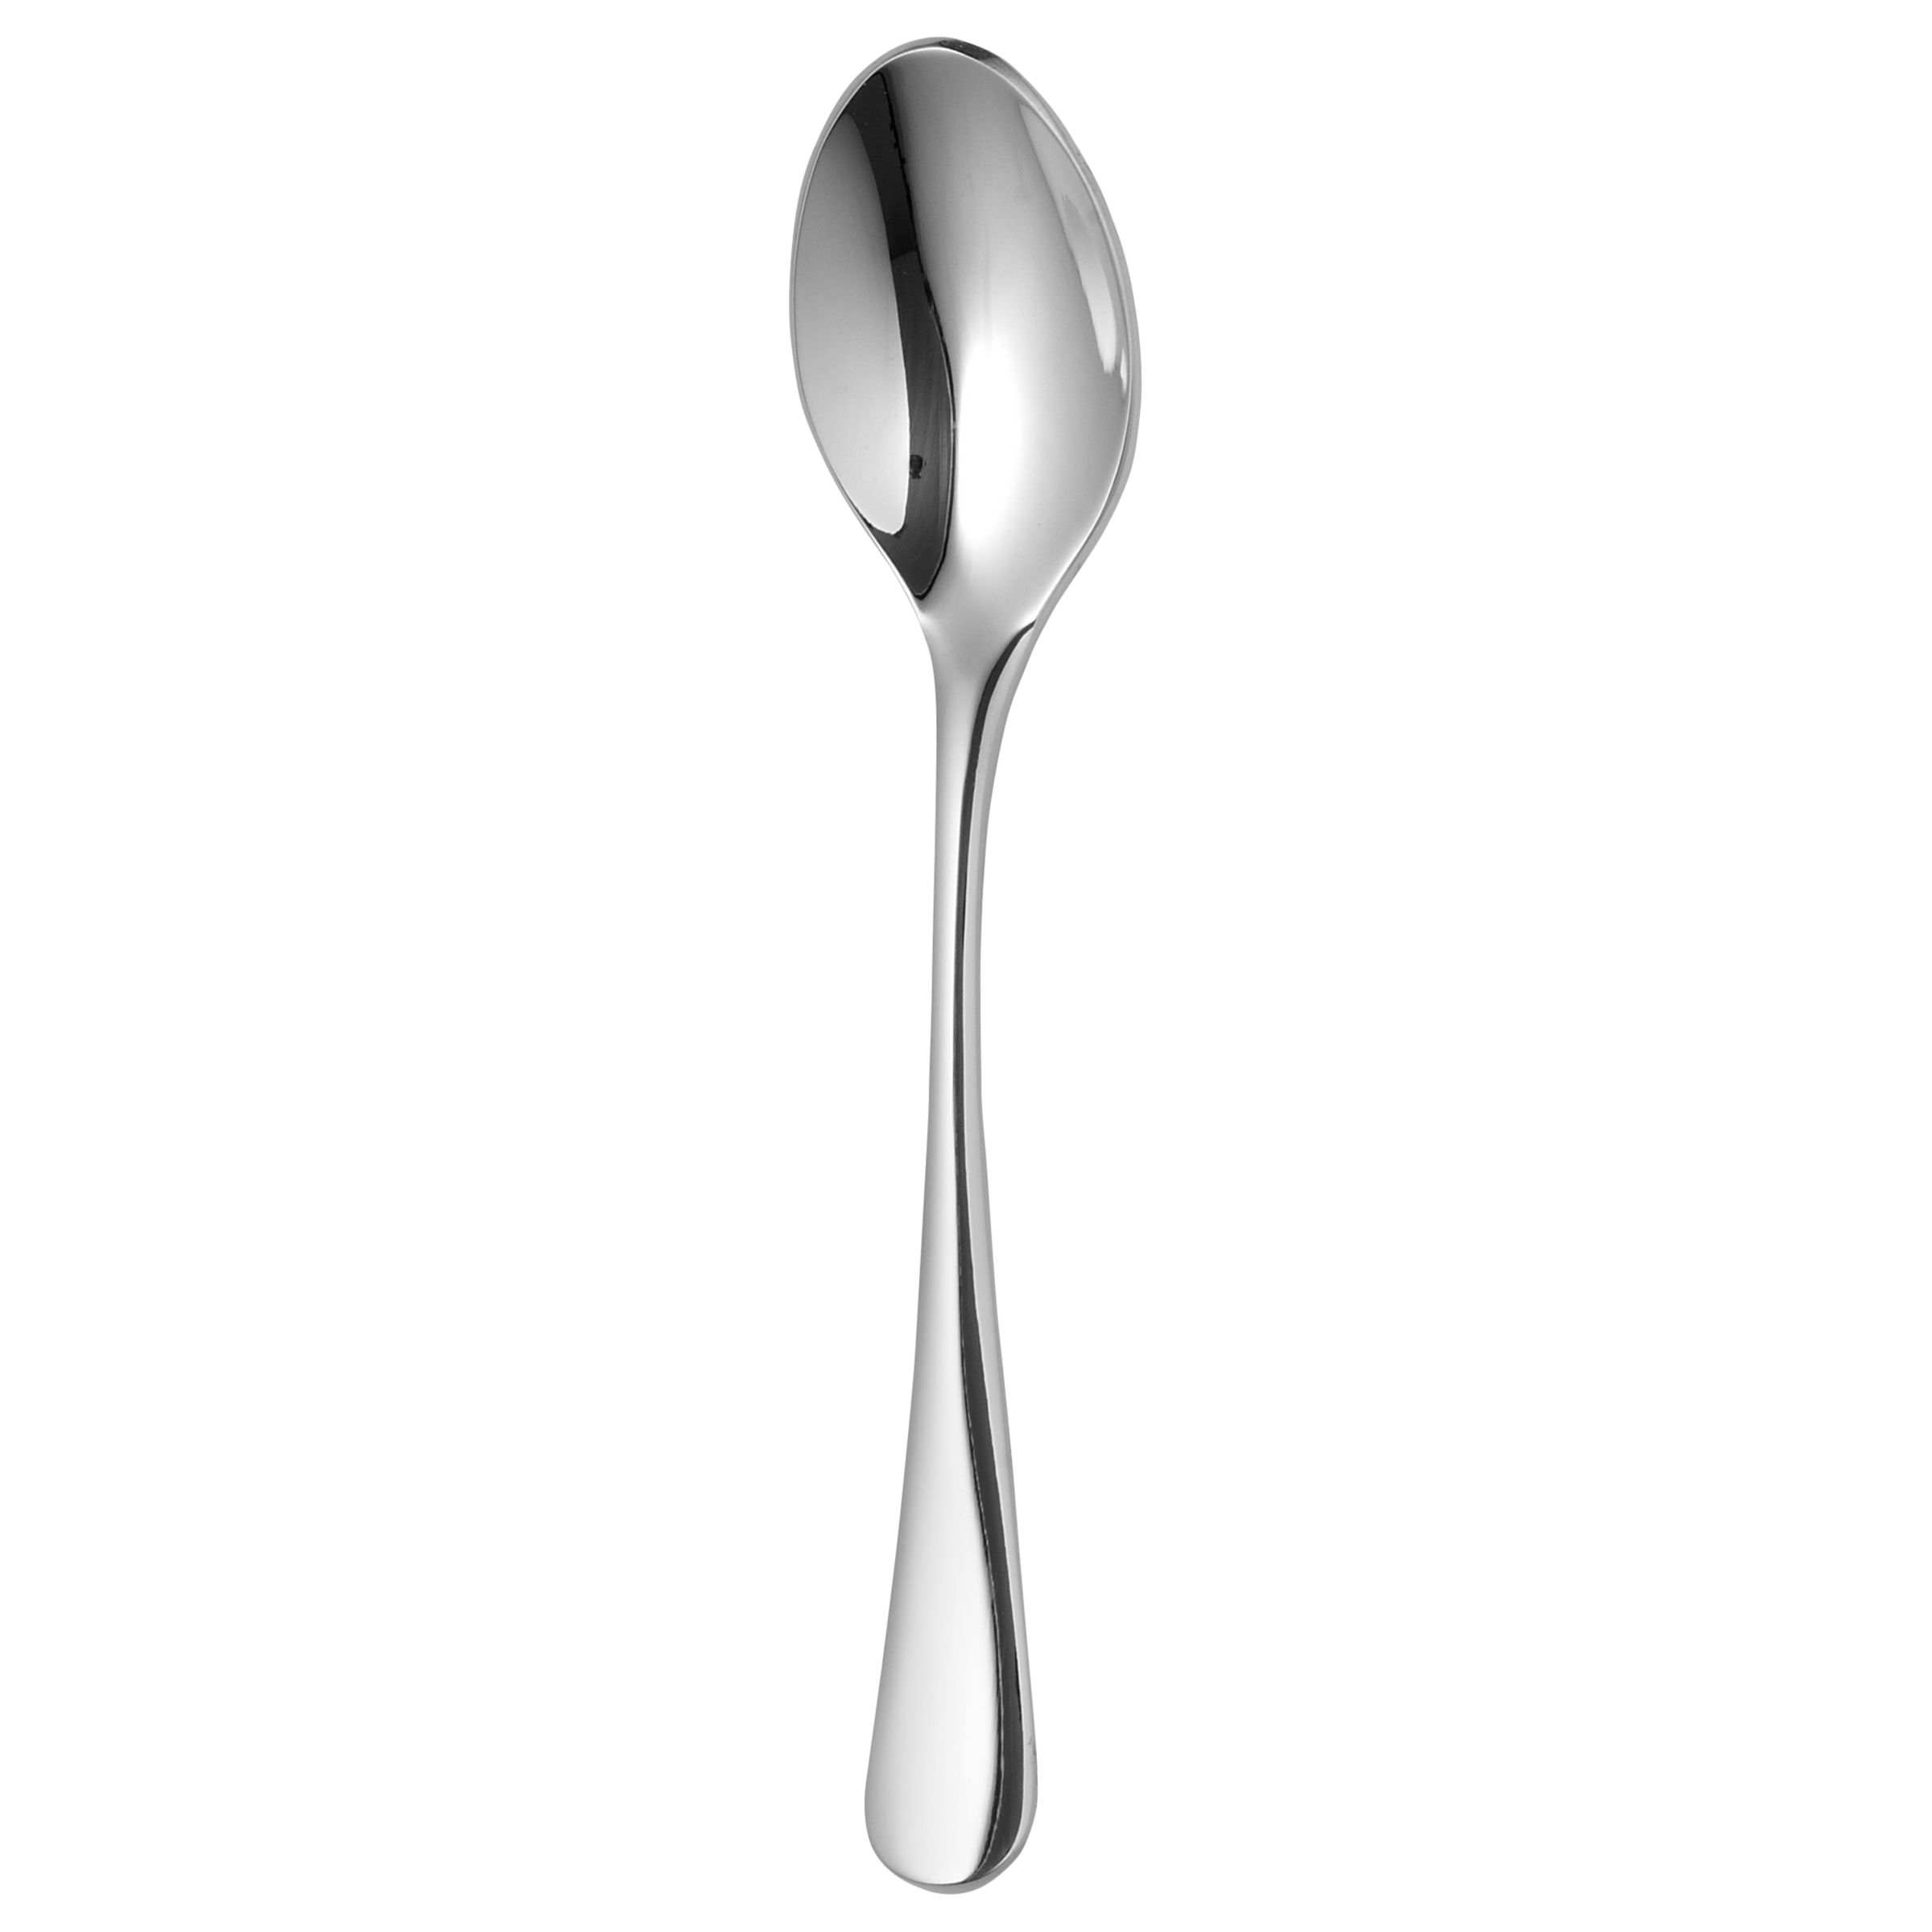 Radford Espresso Spoon